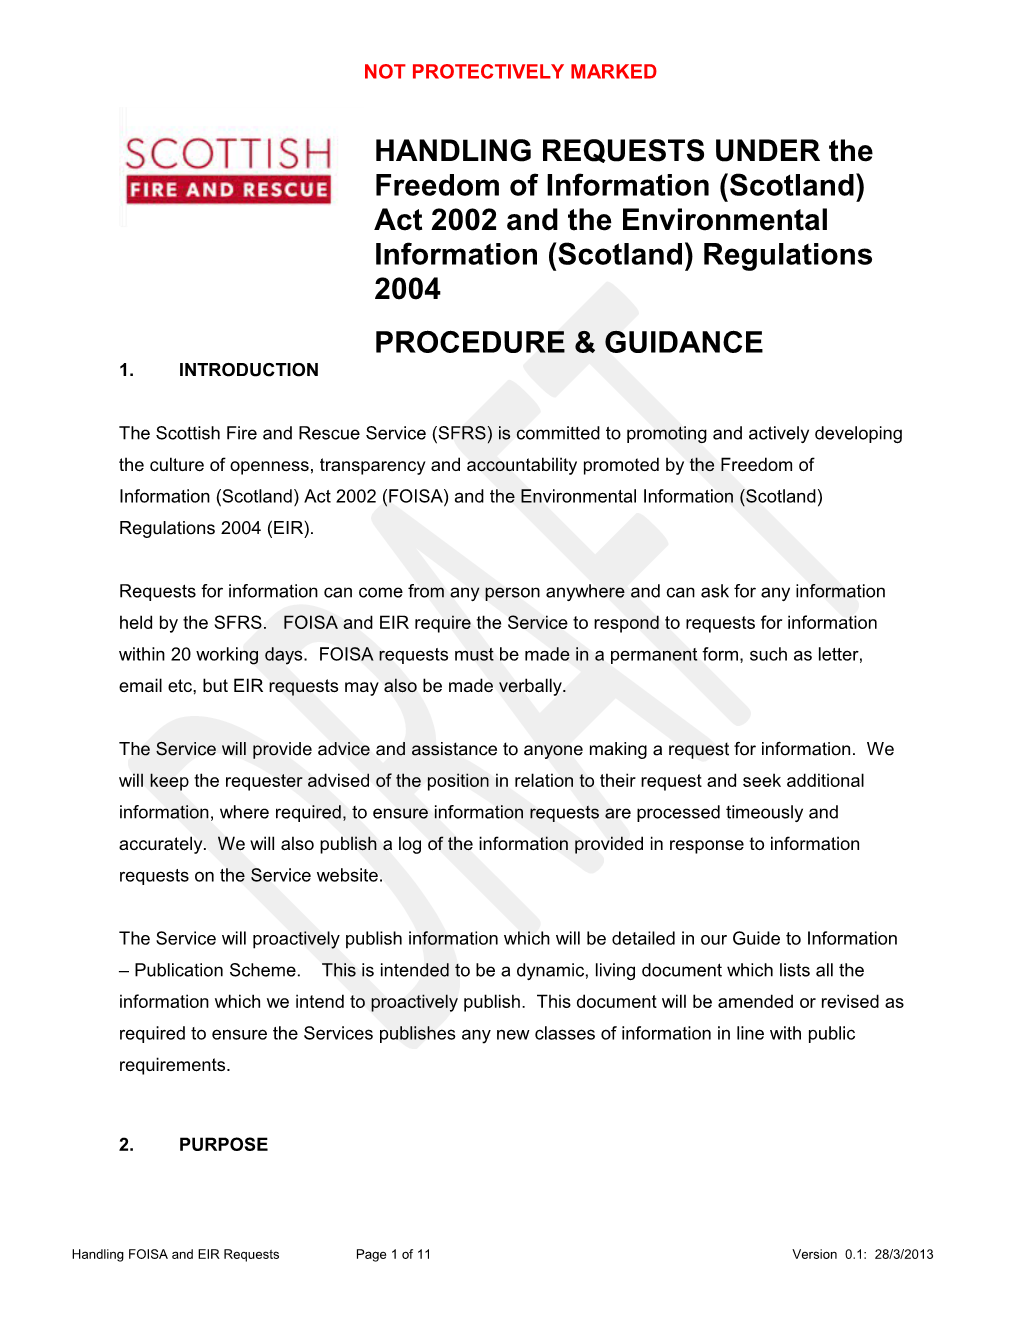 Handling FOISA and EISR Request Procedure Draft 0.1